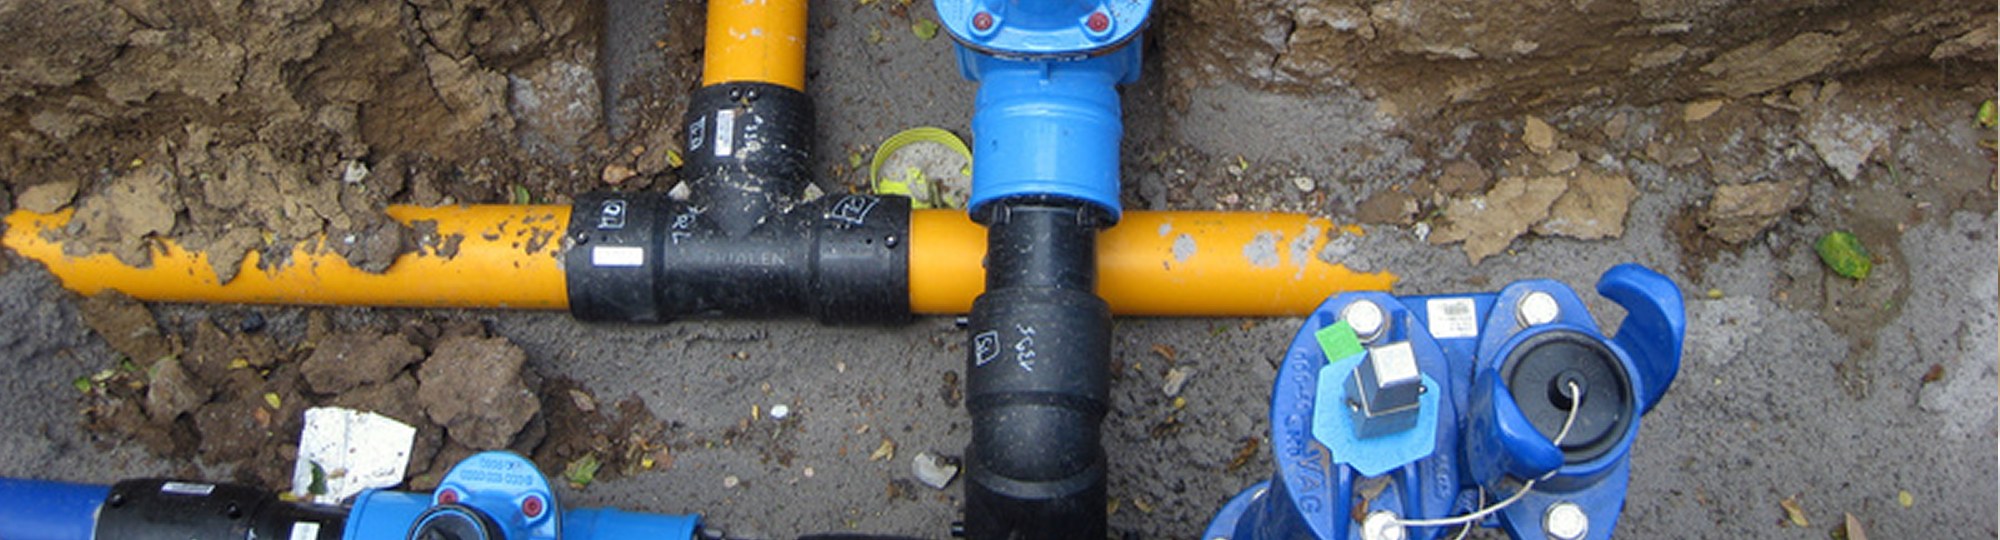 plumbing heating drainage drain problems CCTV water jetting septic tanks soakaways impact moling Basingstoke Hampshire Surrey Berkshire